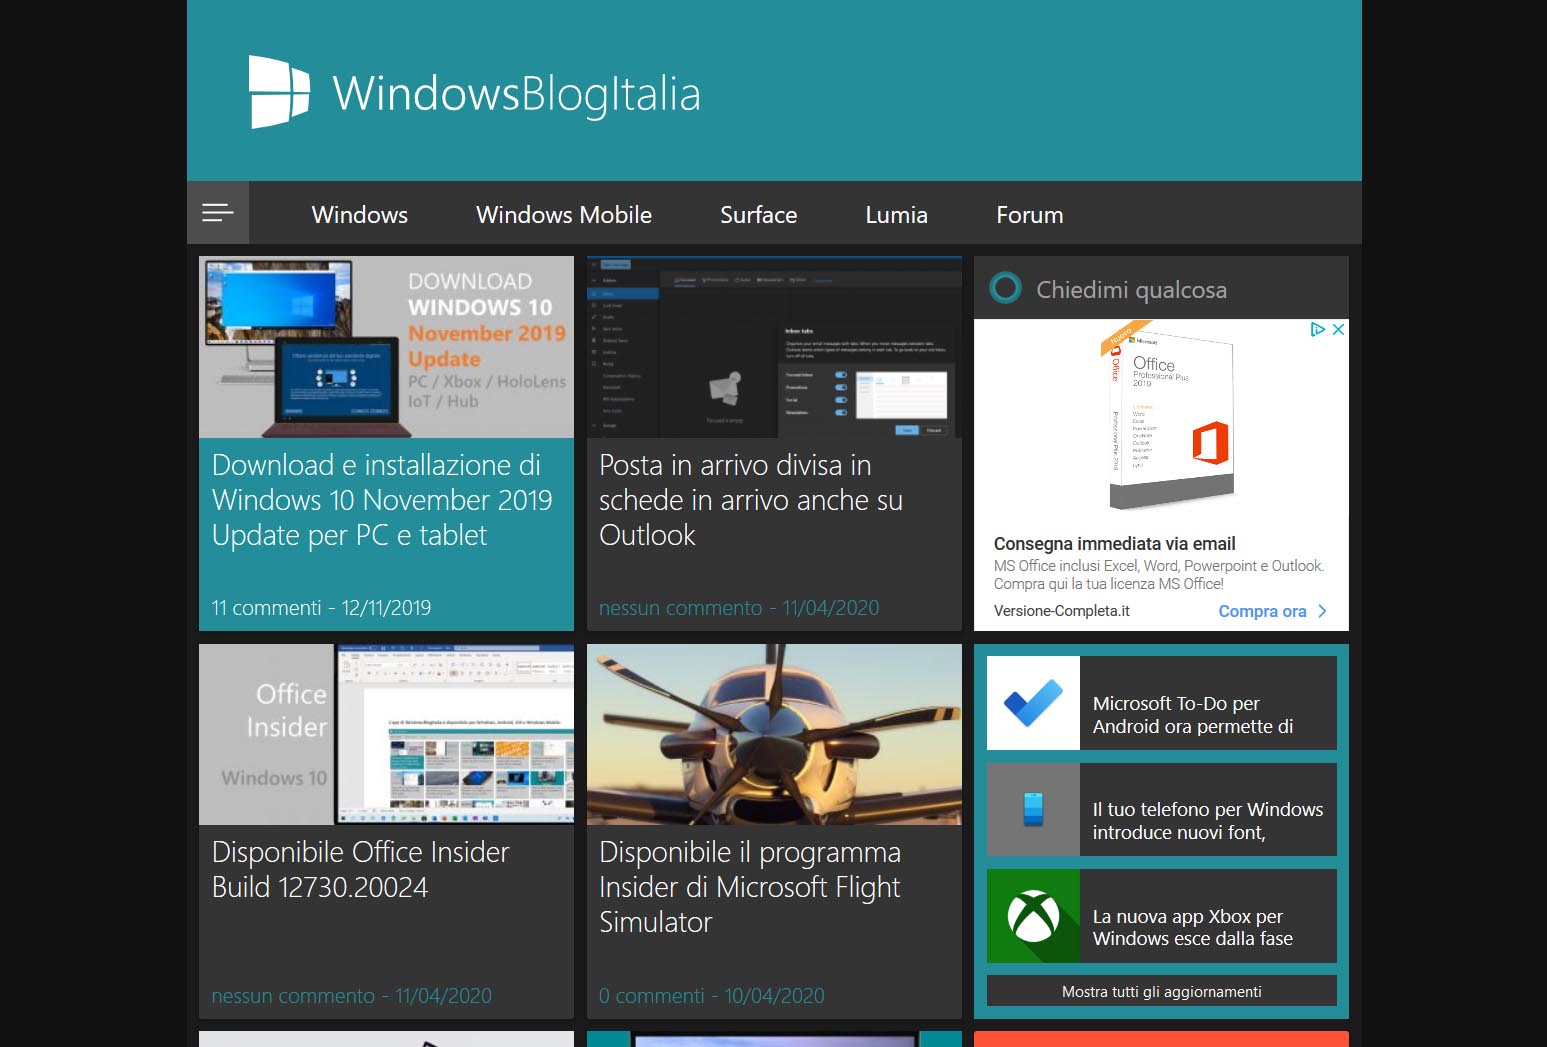 WindowsBlogItalia tema scuro